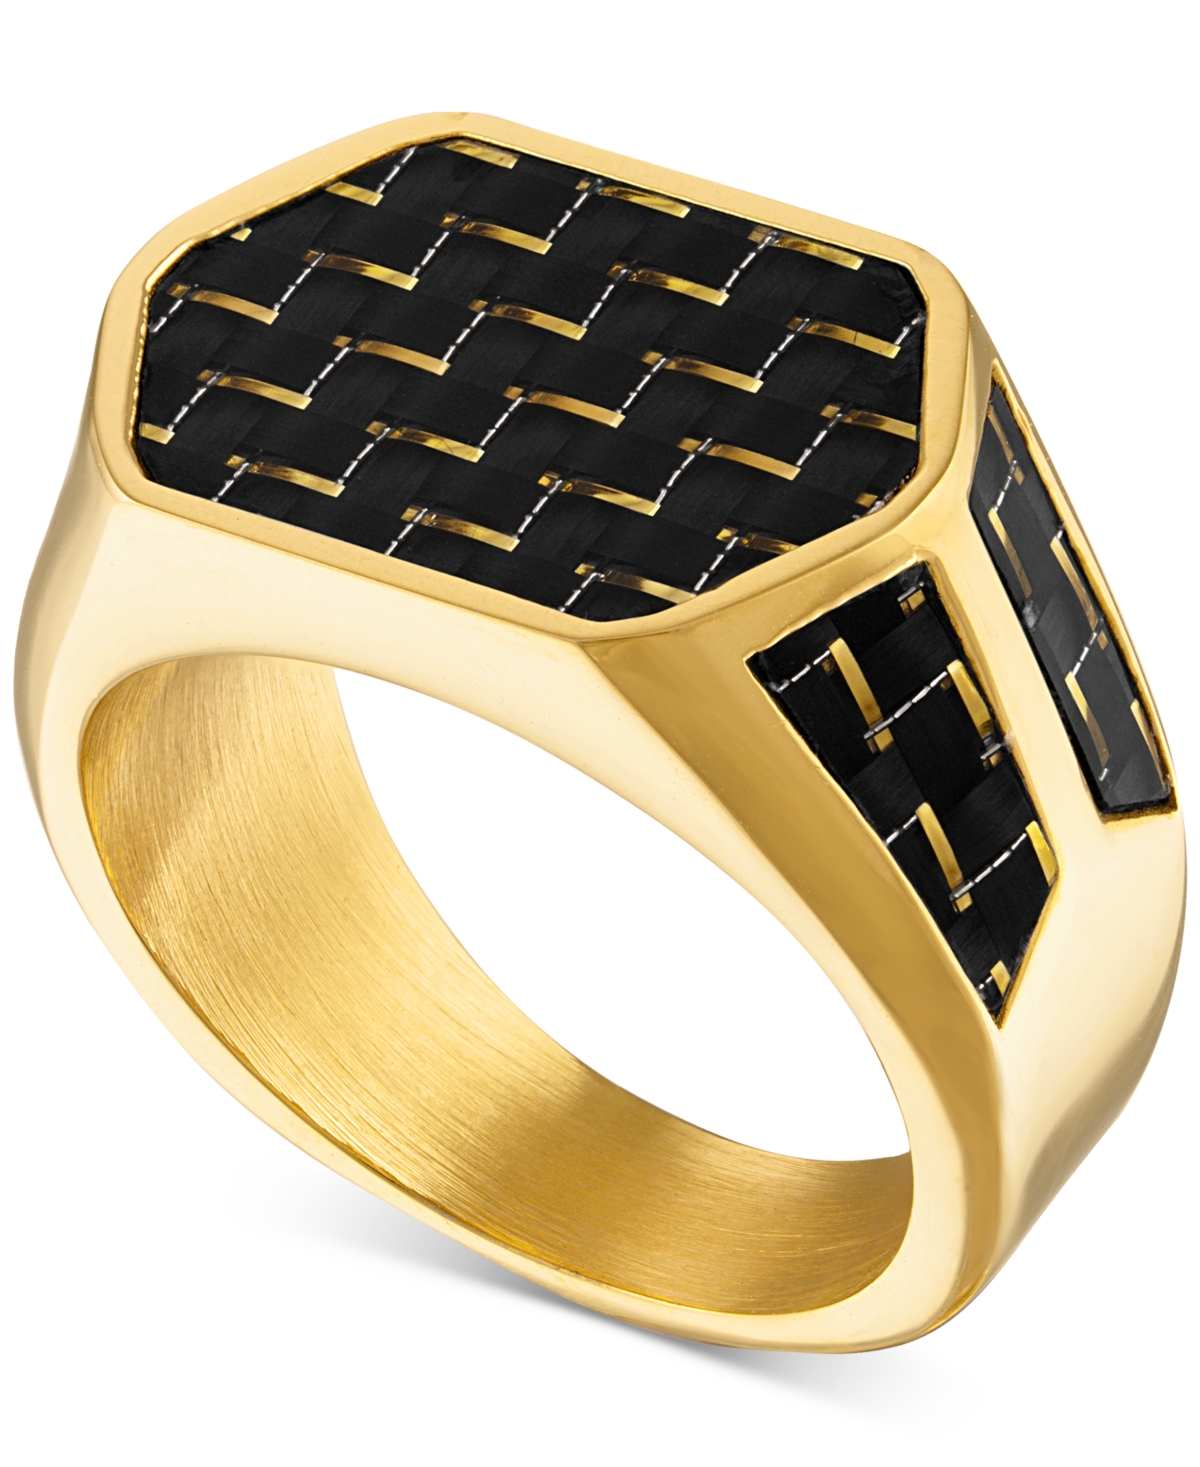 Black & Blue Carbon Fiber Beveled Ring, (Also in Black & Gold Carbon Fiber), Created for Macy's - Gold-Tone